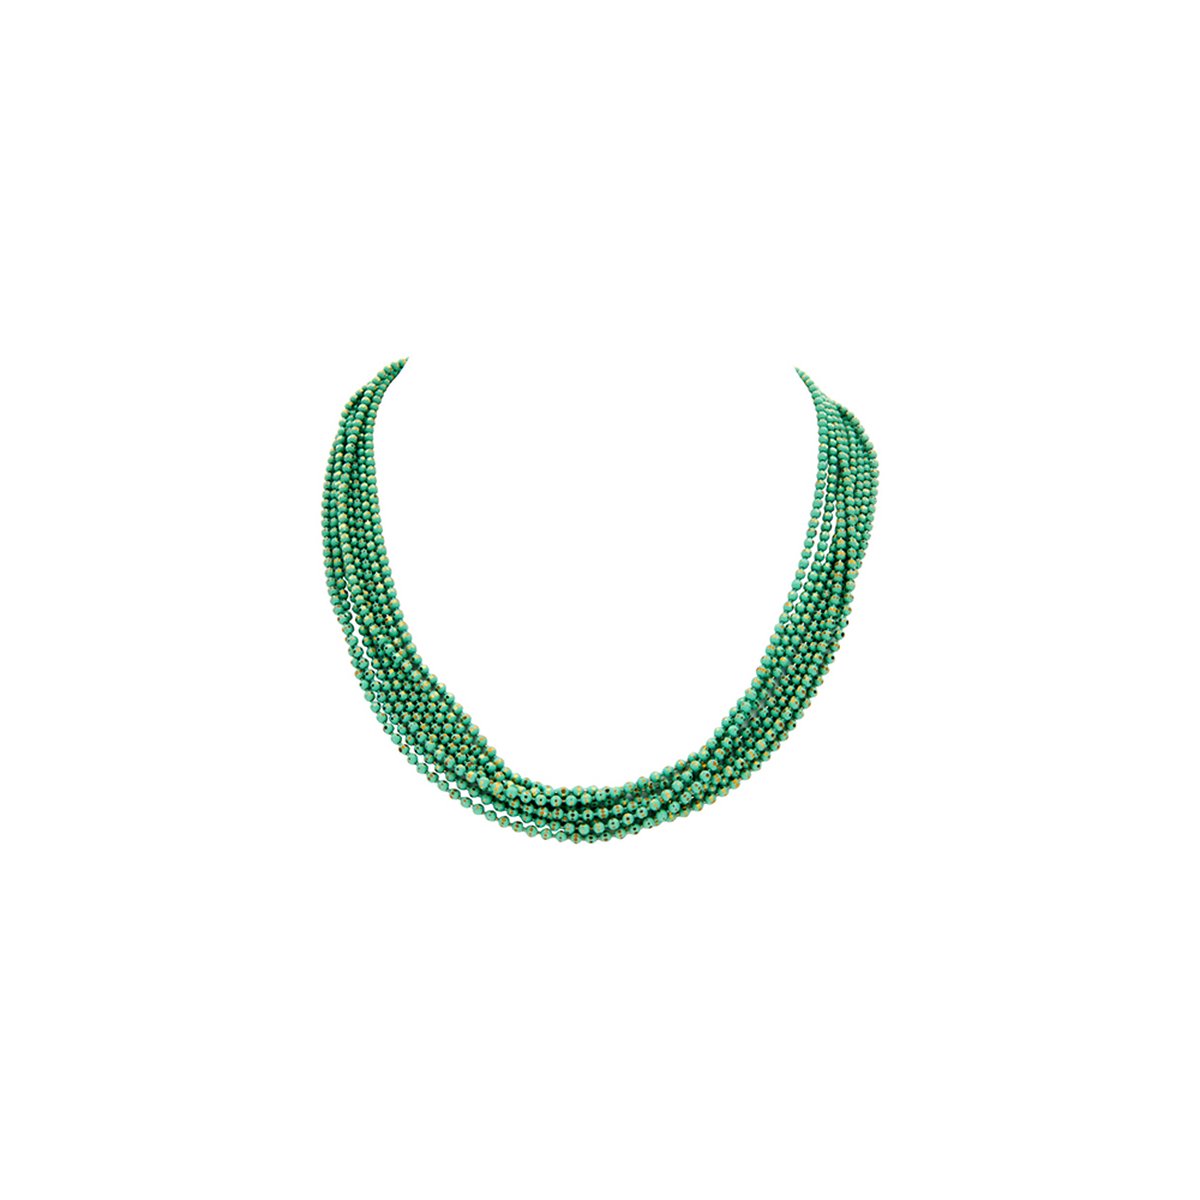 Les Cordes - Halsketting - Collier - DETTE - Kleur Groen - Metaal - Sieraad Dames - Juwelen - Statement ketting